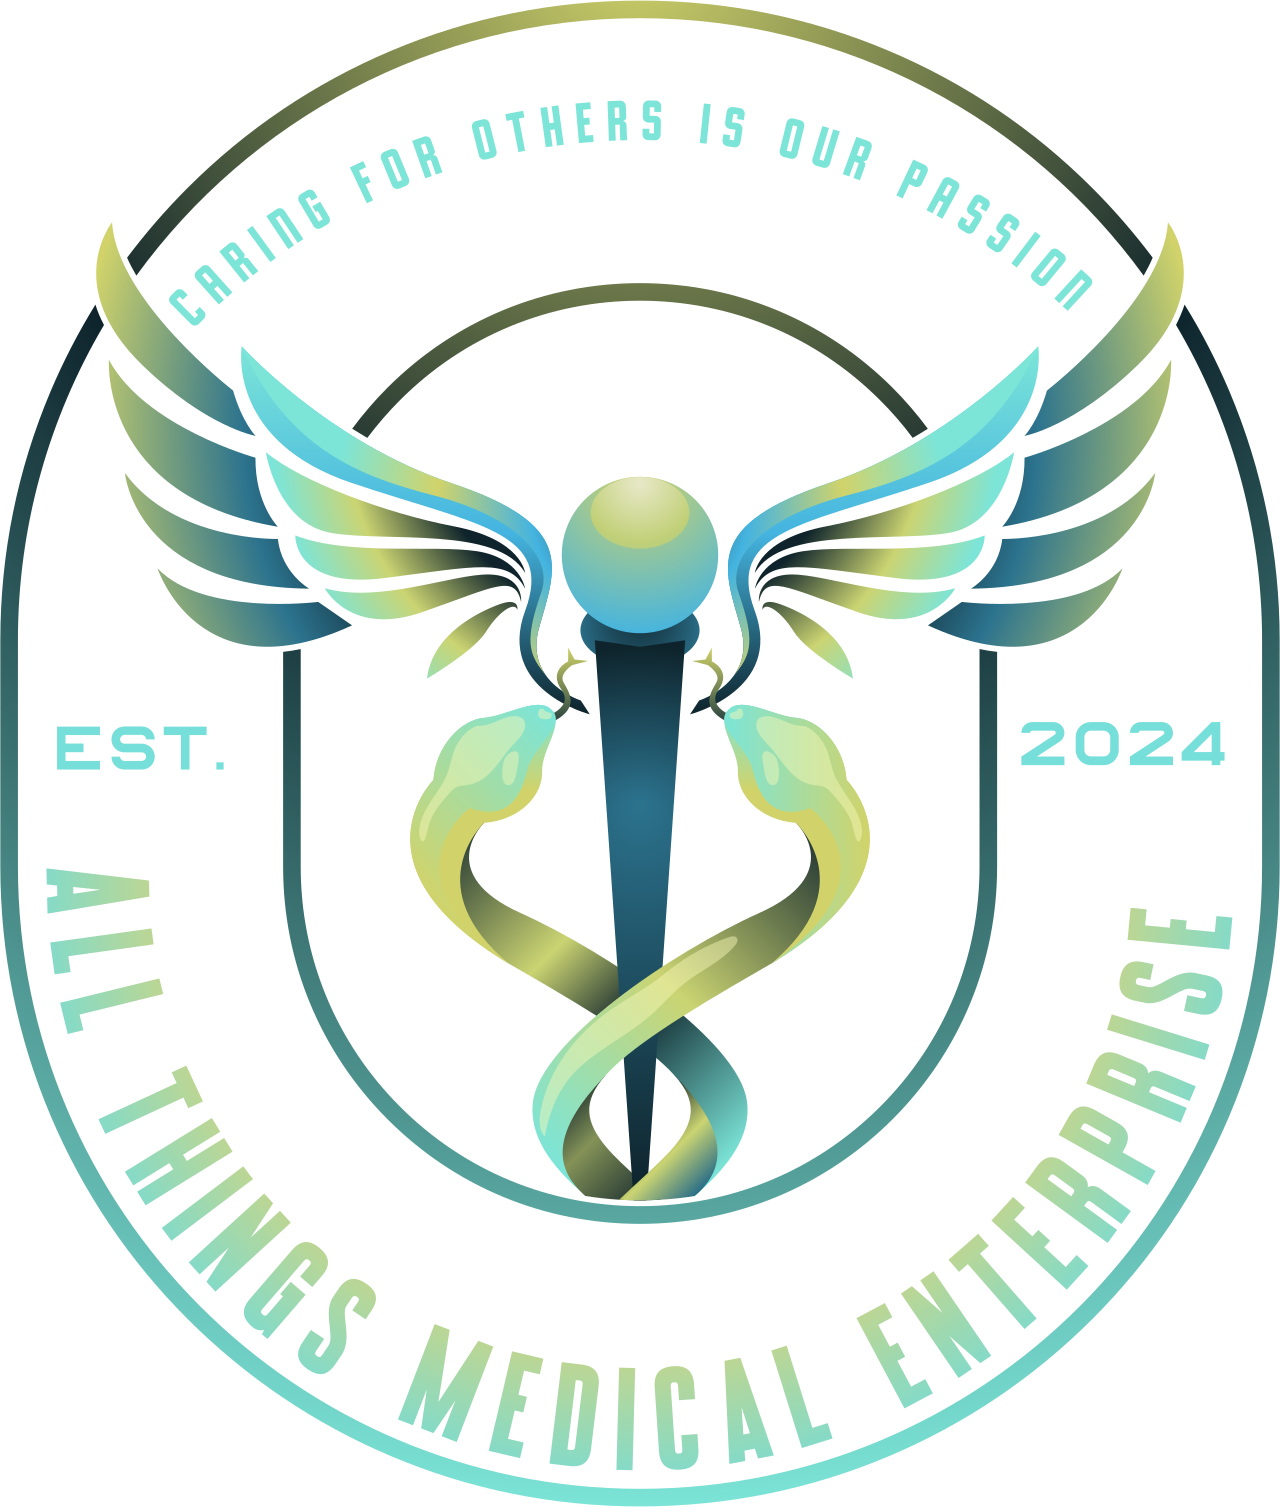 All things medical enterprise 's logo